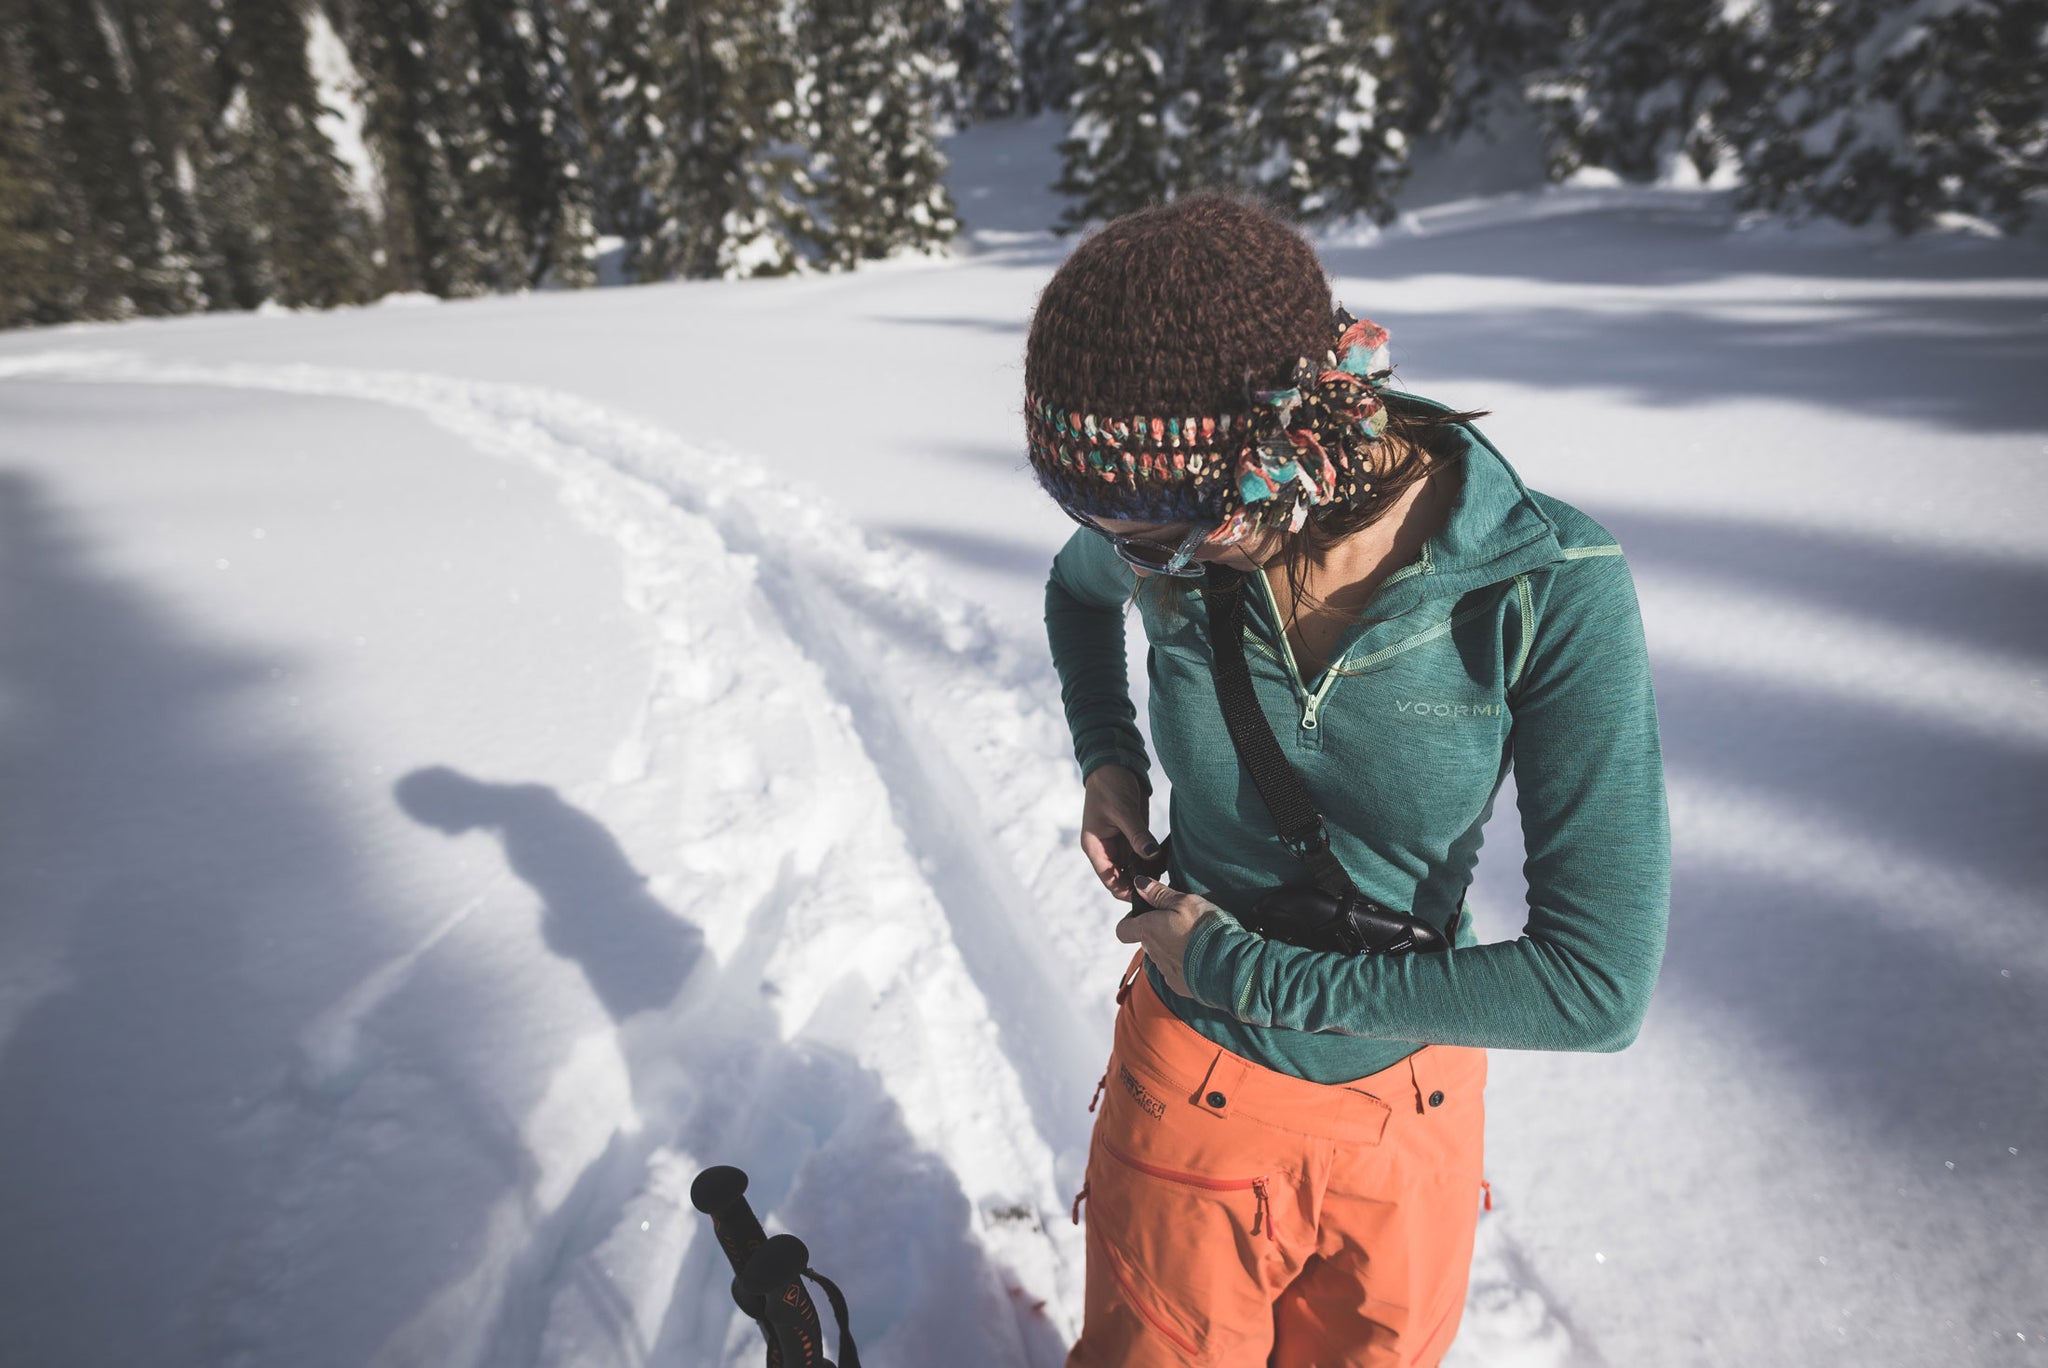 Women's Voormi gear for backcountry skiing